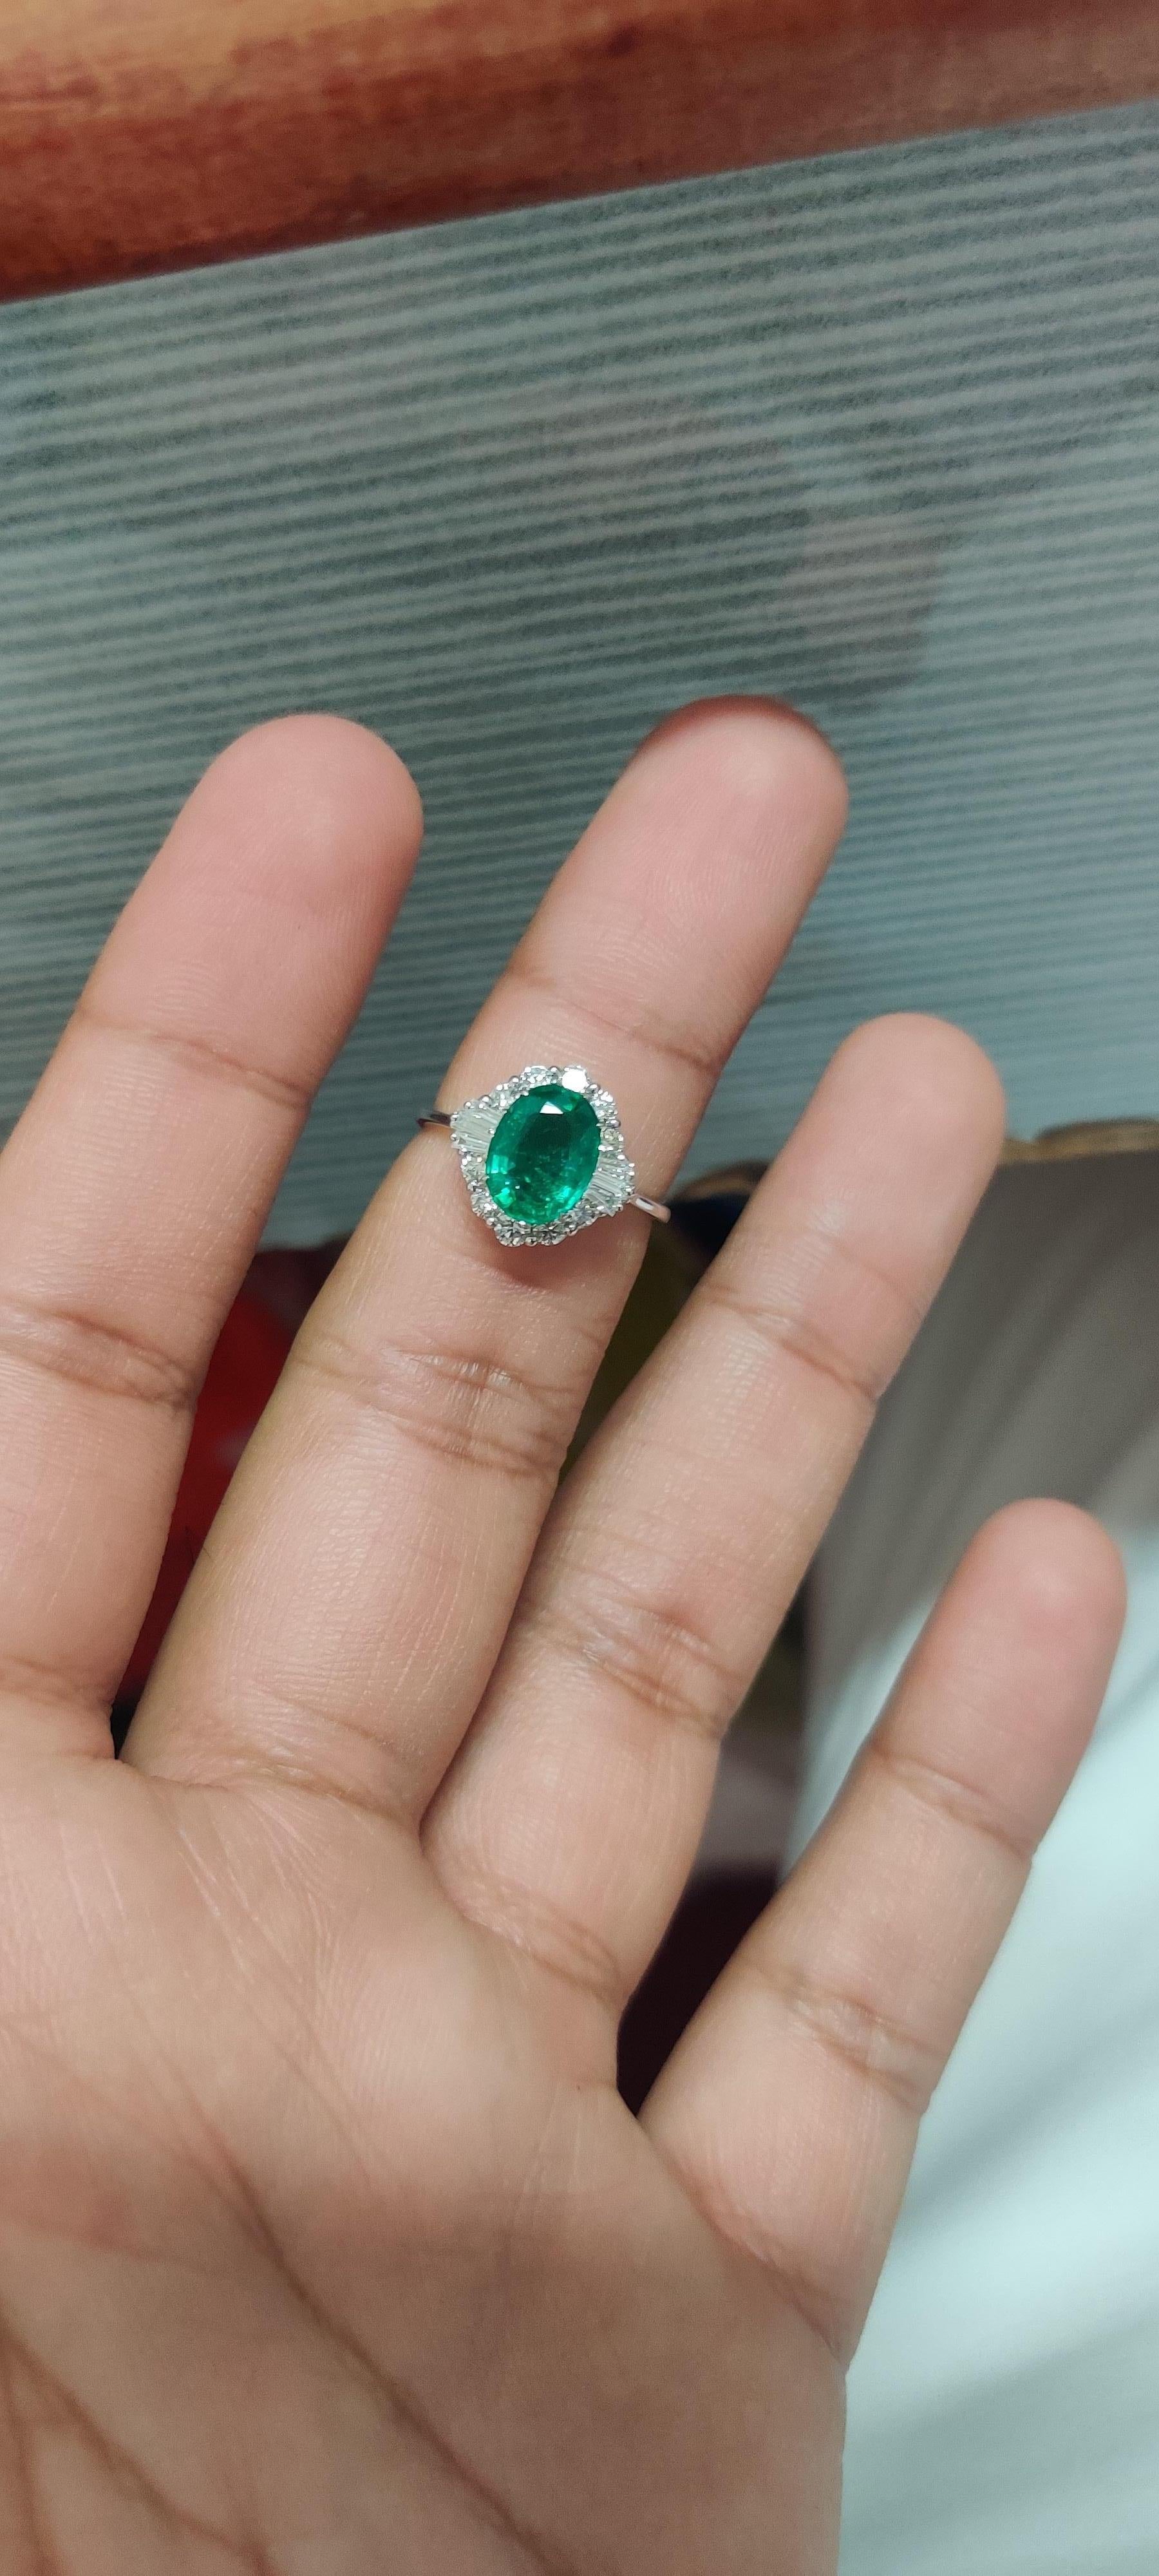 Oval Cut 1.67 Carat Natural Zambian Emerald Diamond Ring For Sale